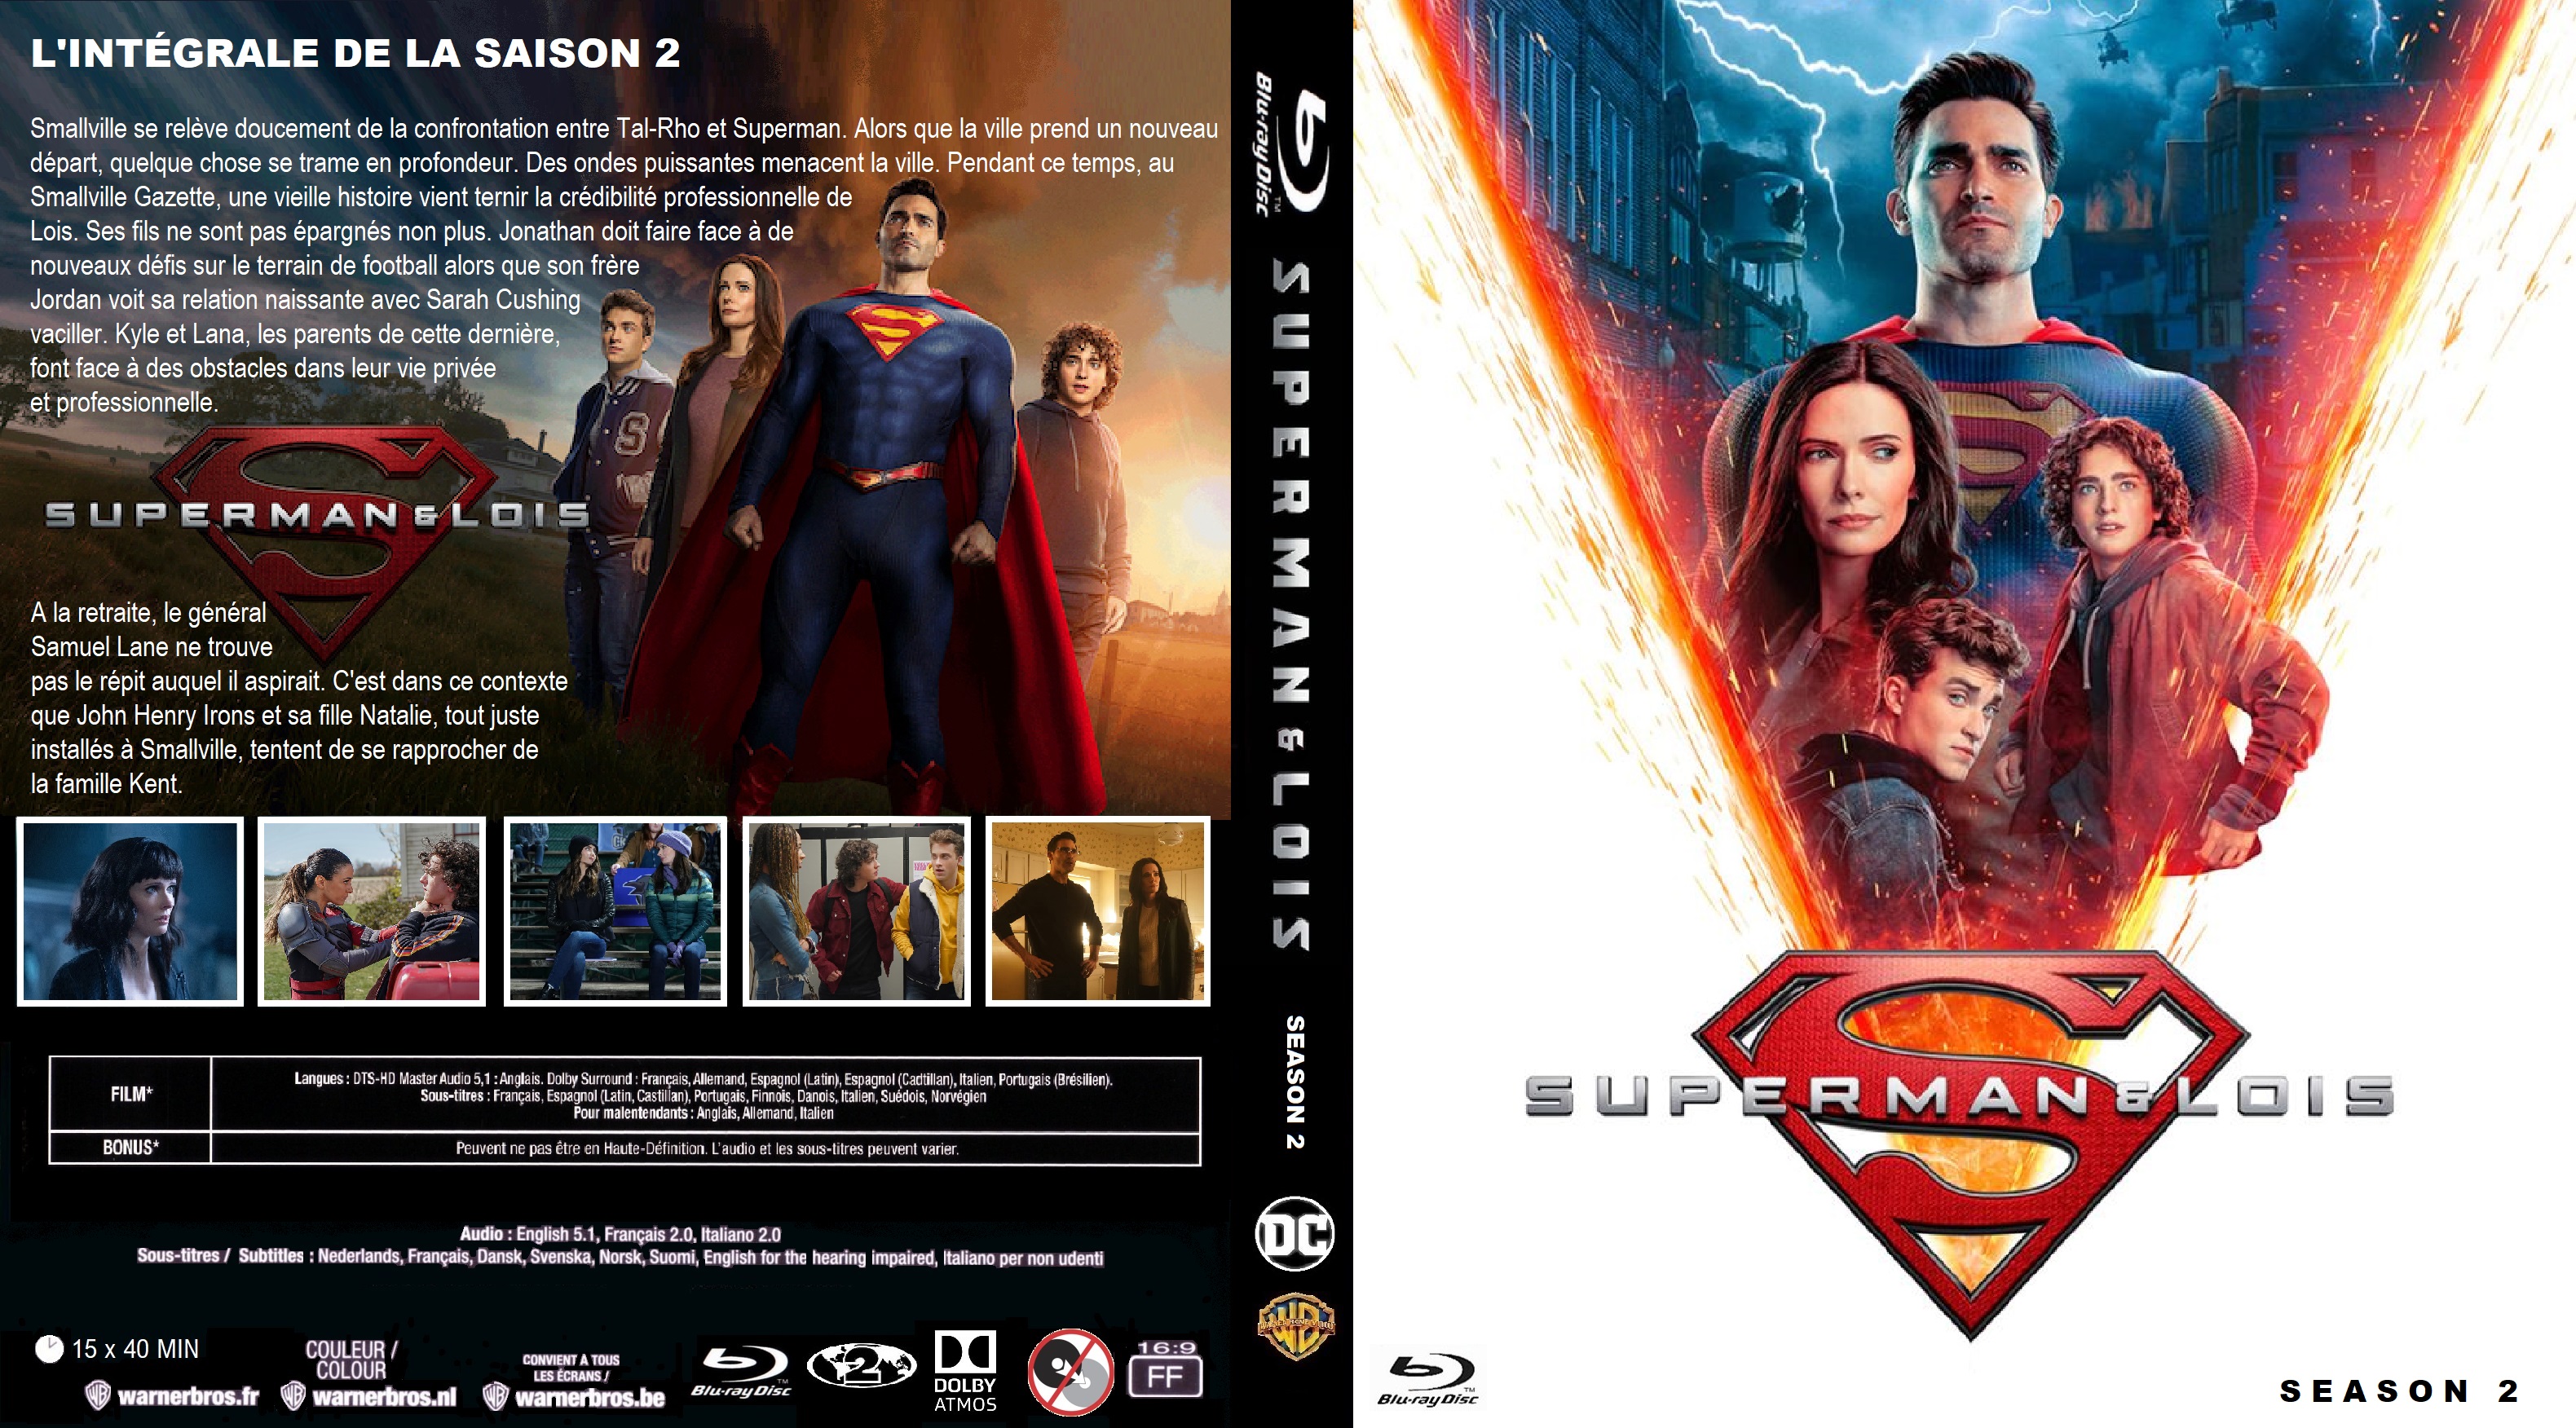 Jaquette DVD Superman & Lois saison 2 Blu ray custom